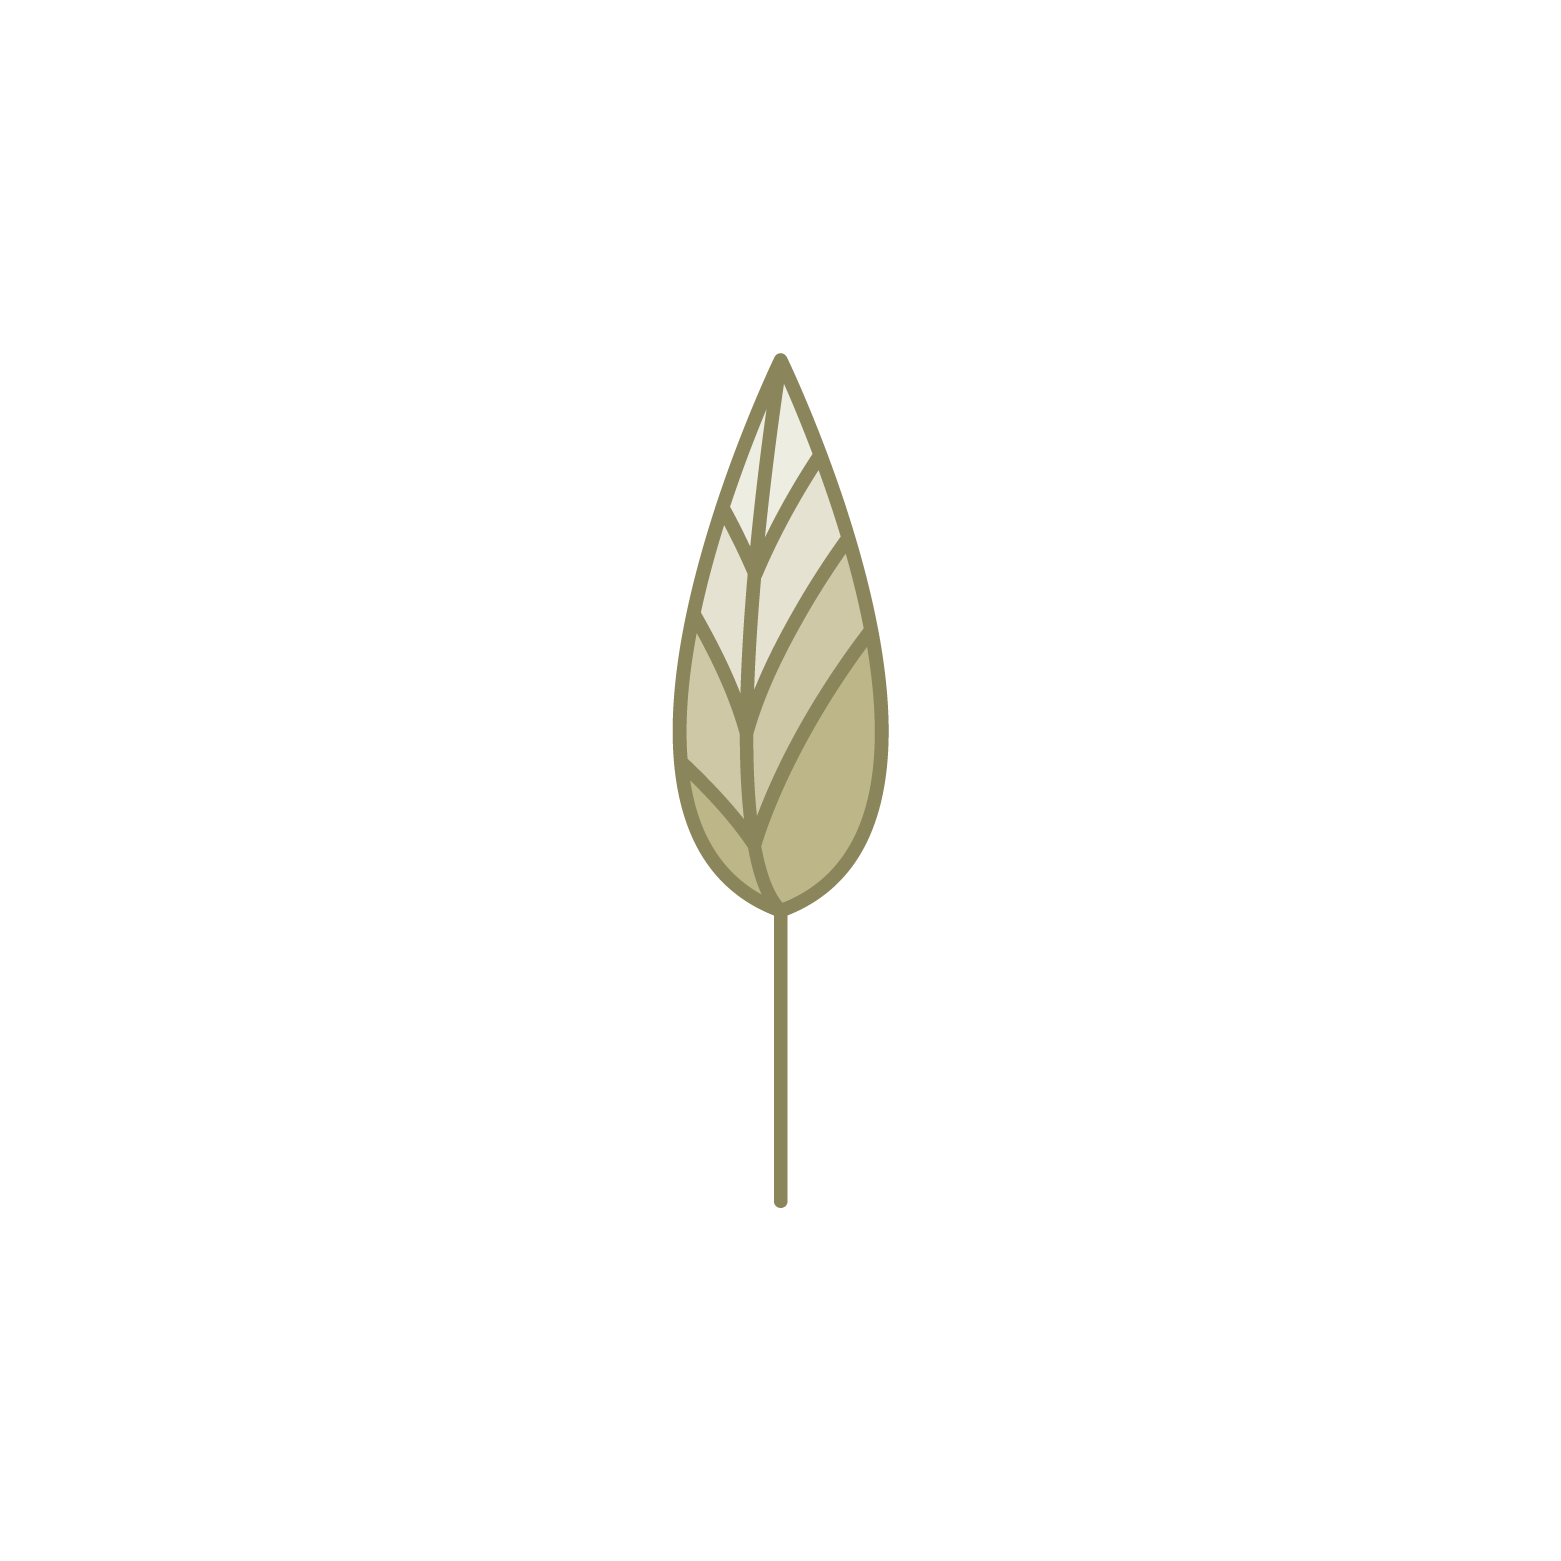 Studio 1515 leaf logo-01.png